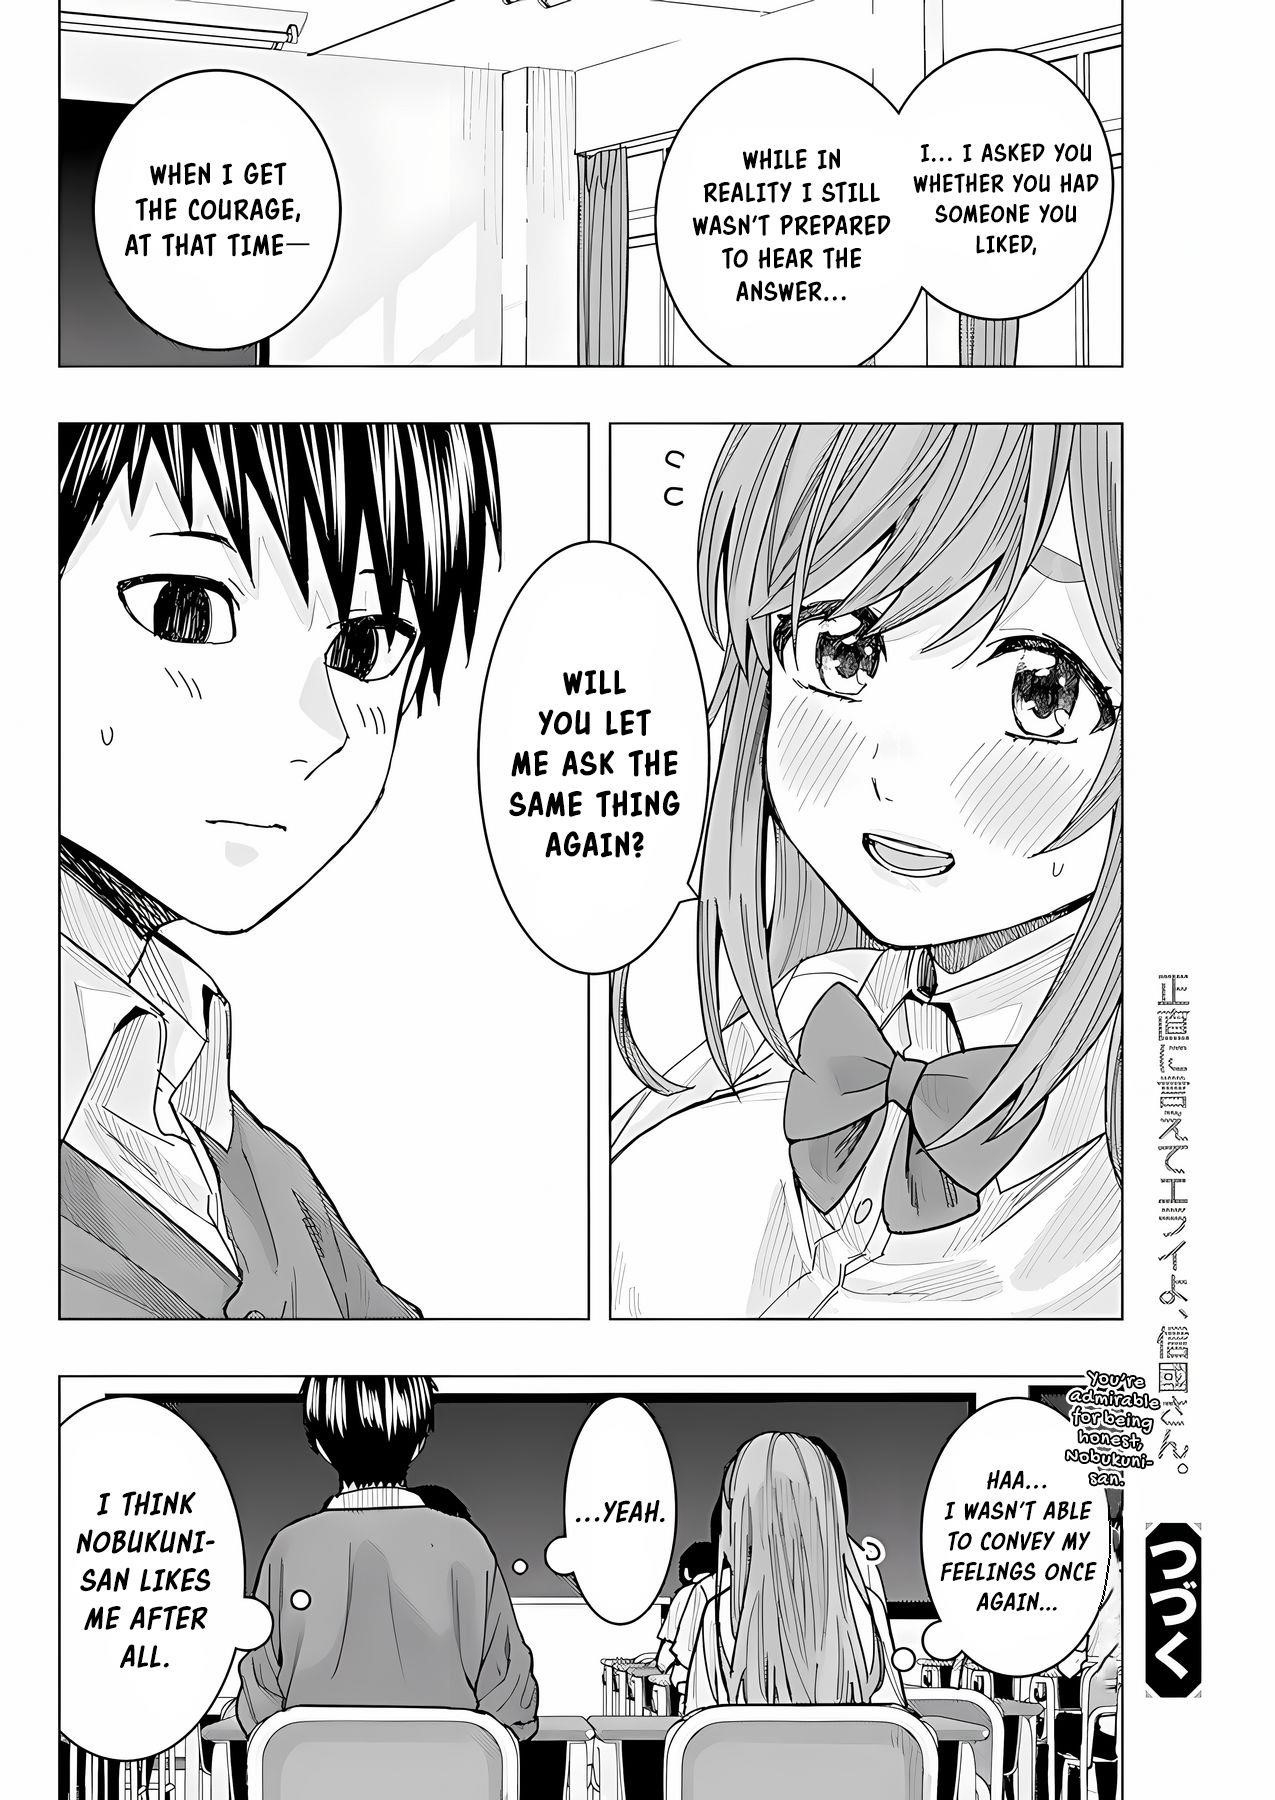 “Nobukuni-san” Does She Like Me? Chapter 21 - Page 14